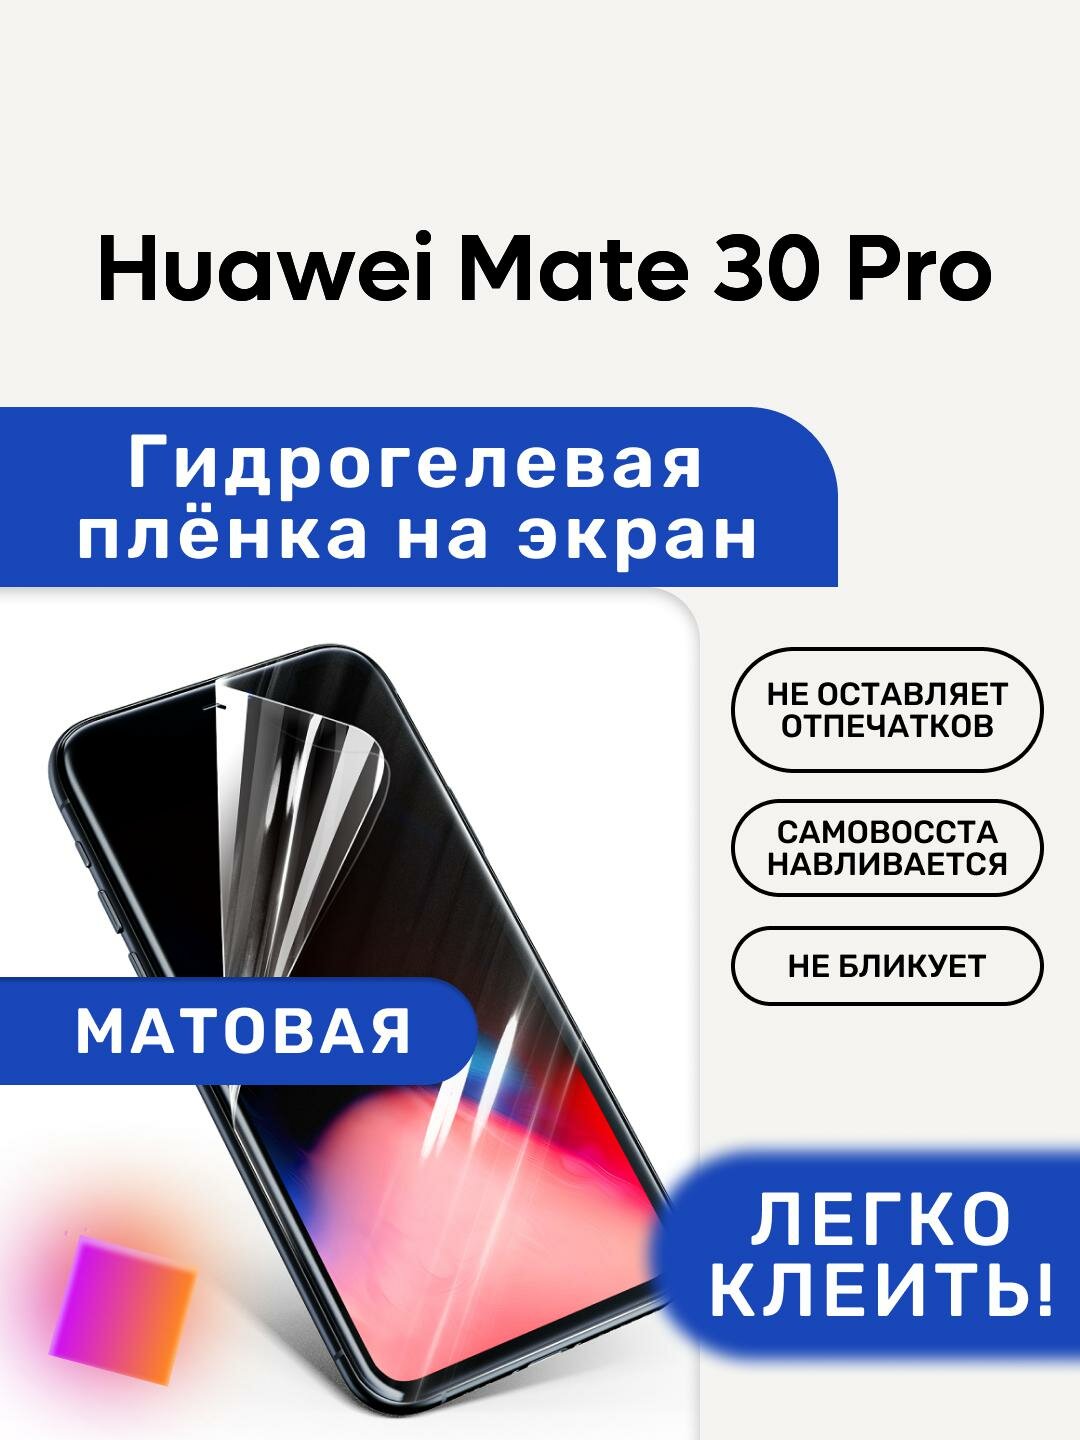 Матовая Гидрогелевая плёнка, полиуретановая, защита экрана Huawei Mate 30 Pro